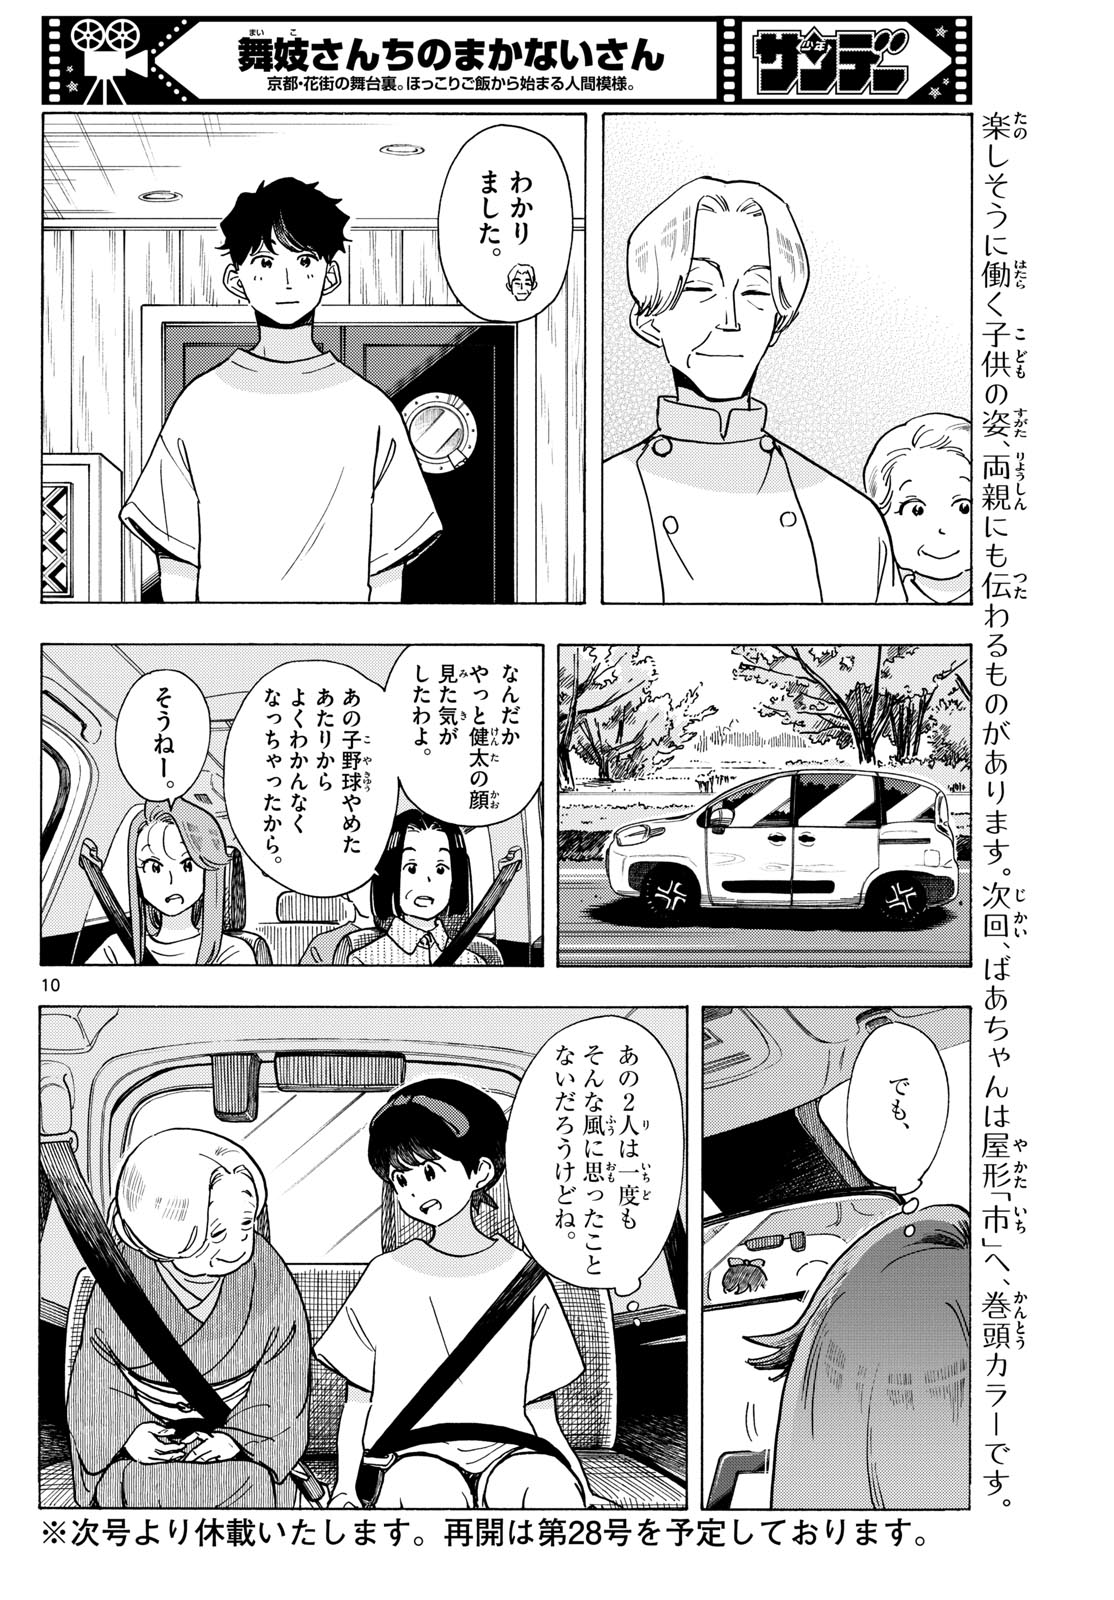 Maiko-san Chi no Makanai-san - Chapter 302 - Page 10